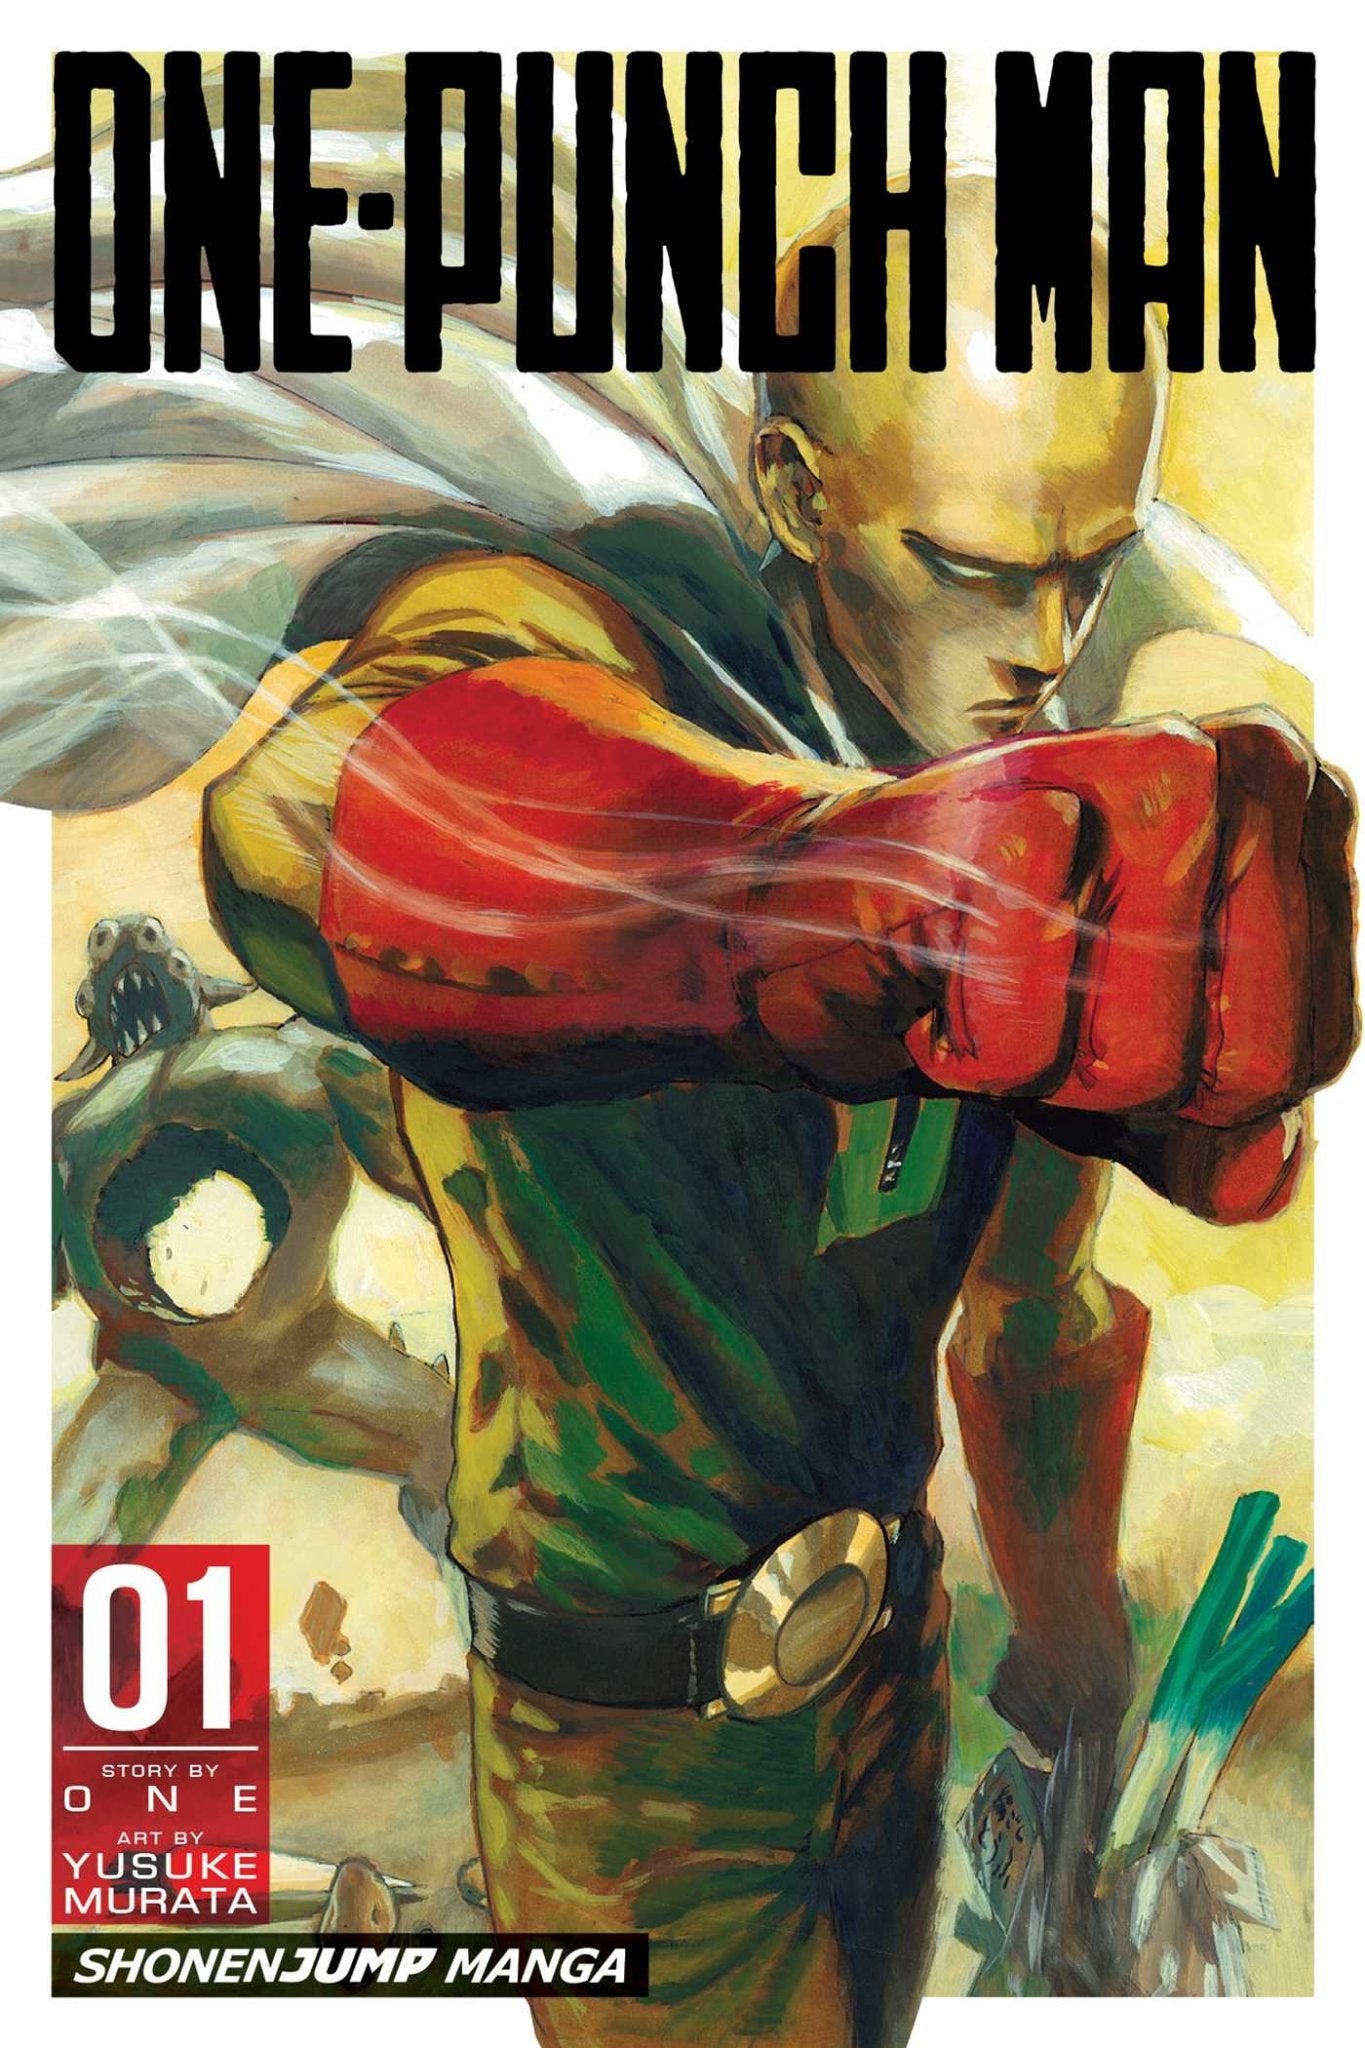 One-Punch Man, Volume 1 by One (Author), Yusuke Murata (Illustrator) - LV'S Global Media